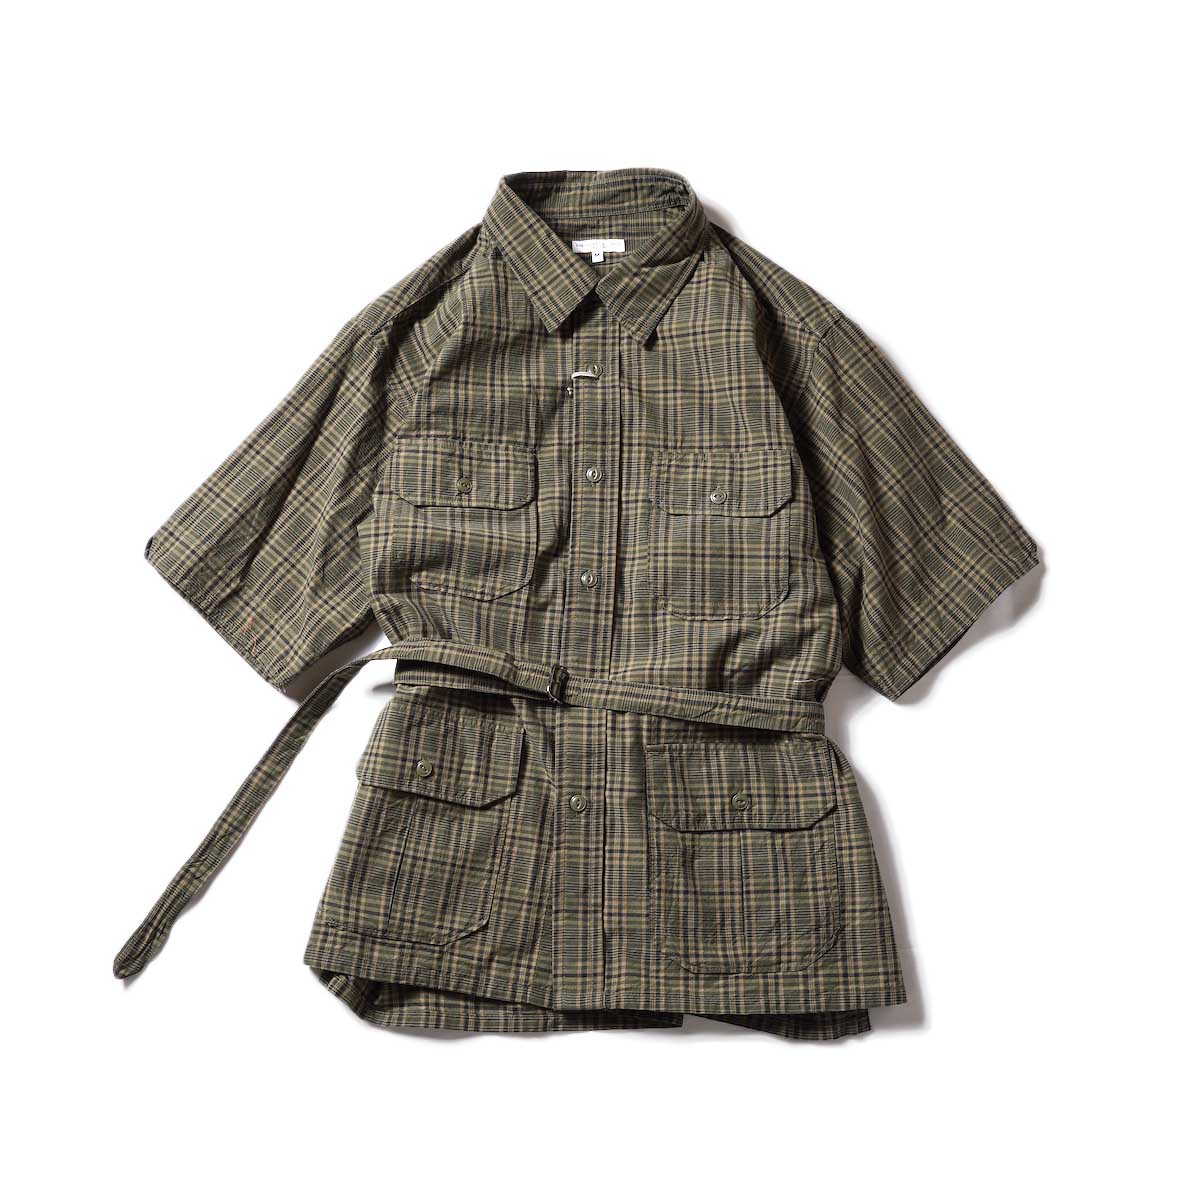 Engineered Garments / S/S Bush Shirt - Cotton Madras Check (Olive/Brown)